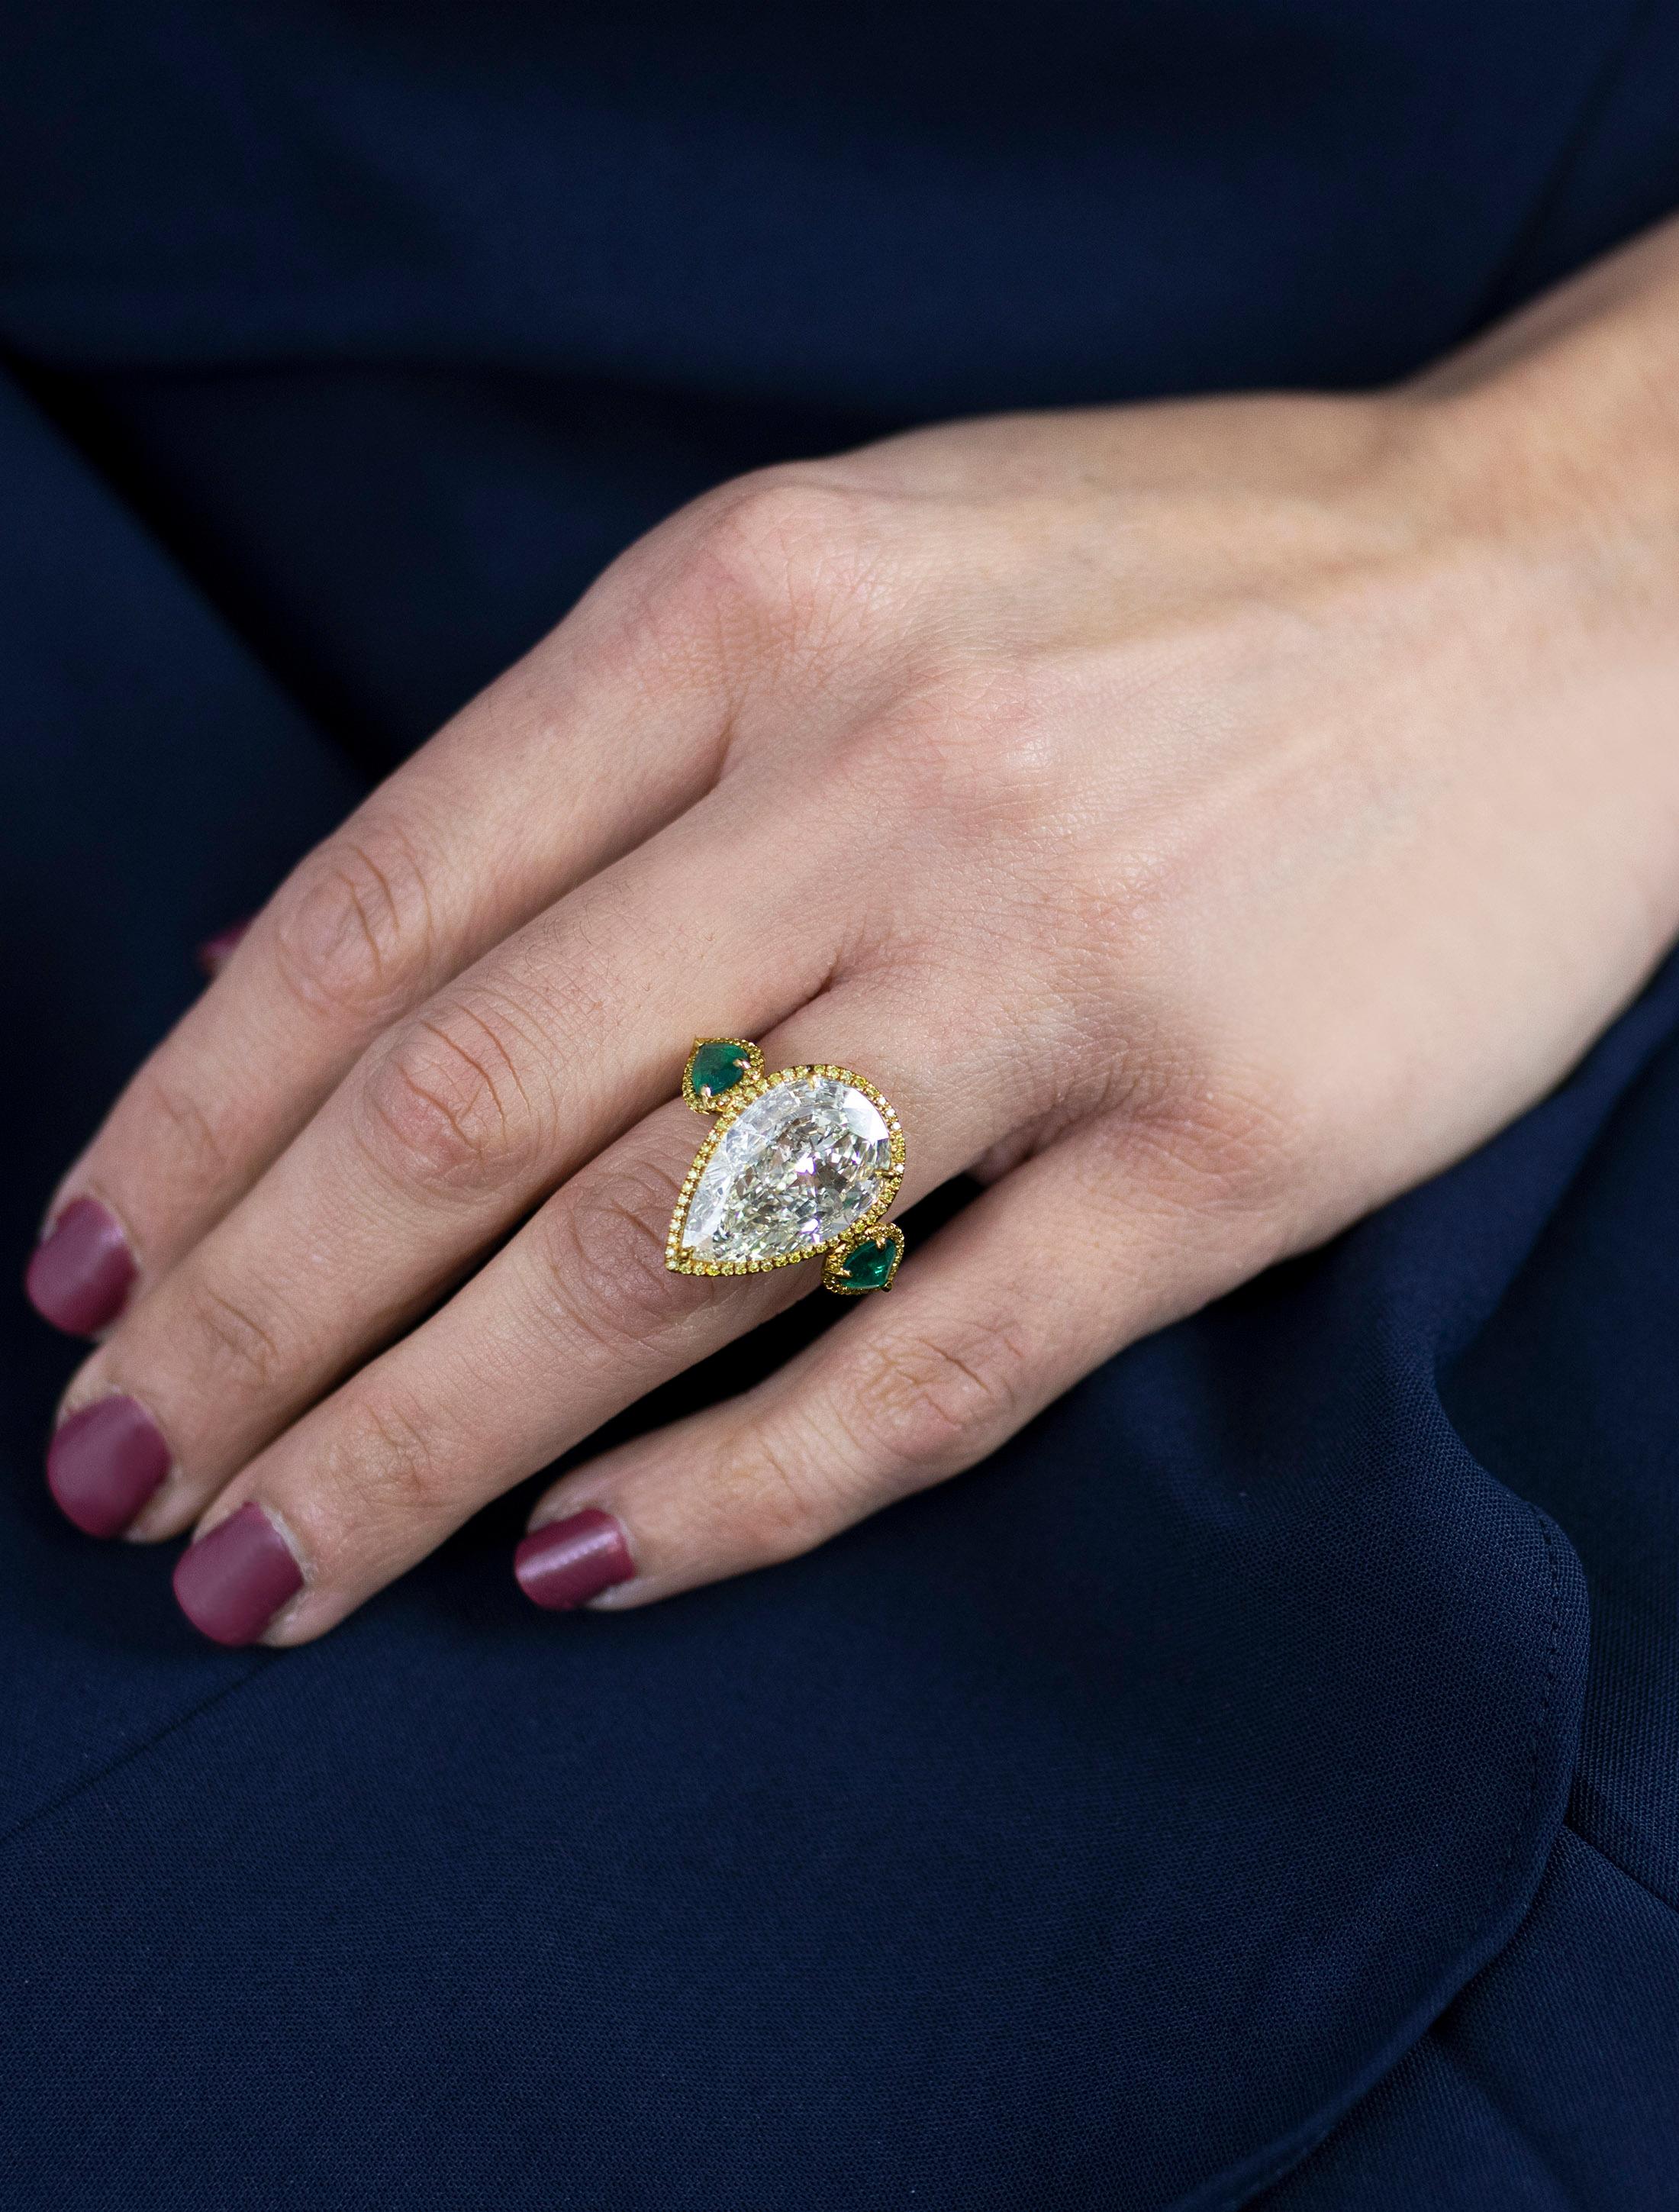 6.5 carat pear shaped diamond ring